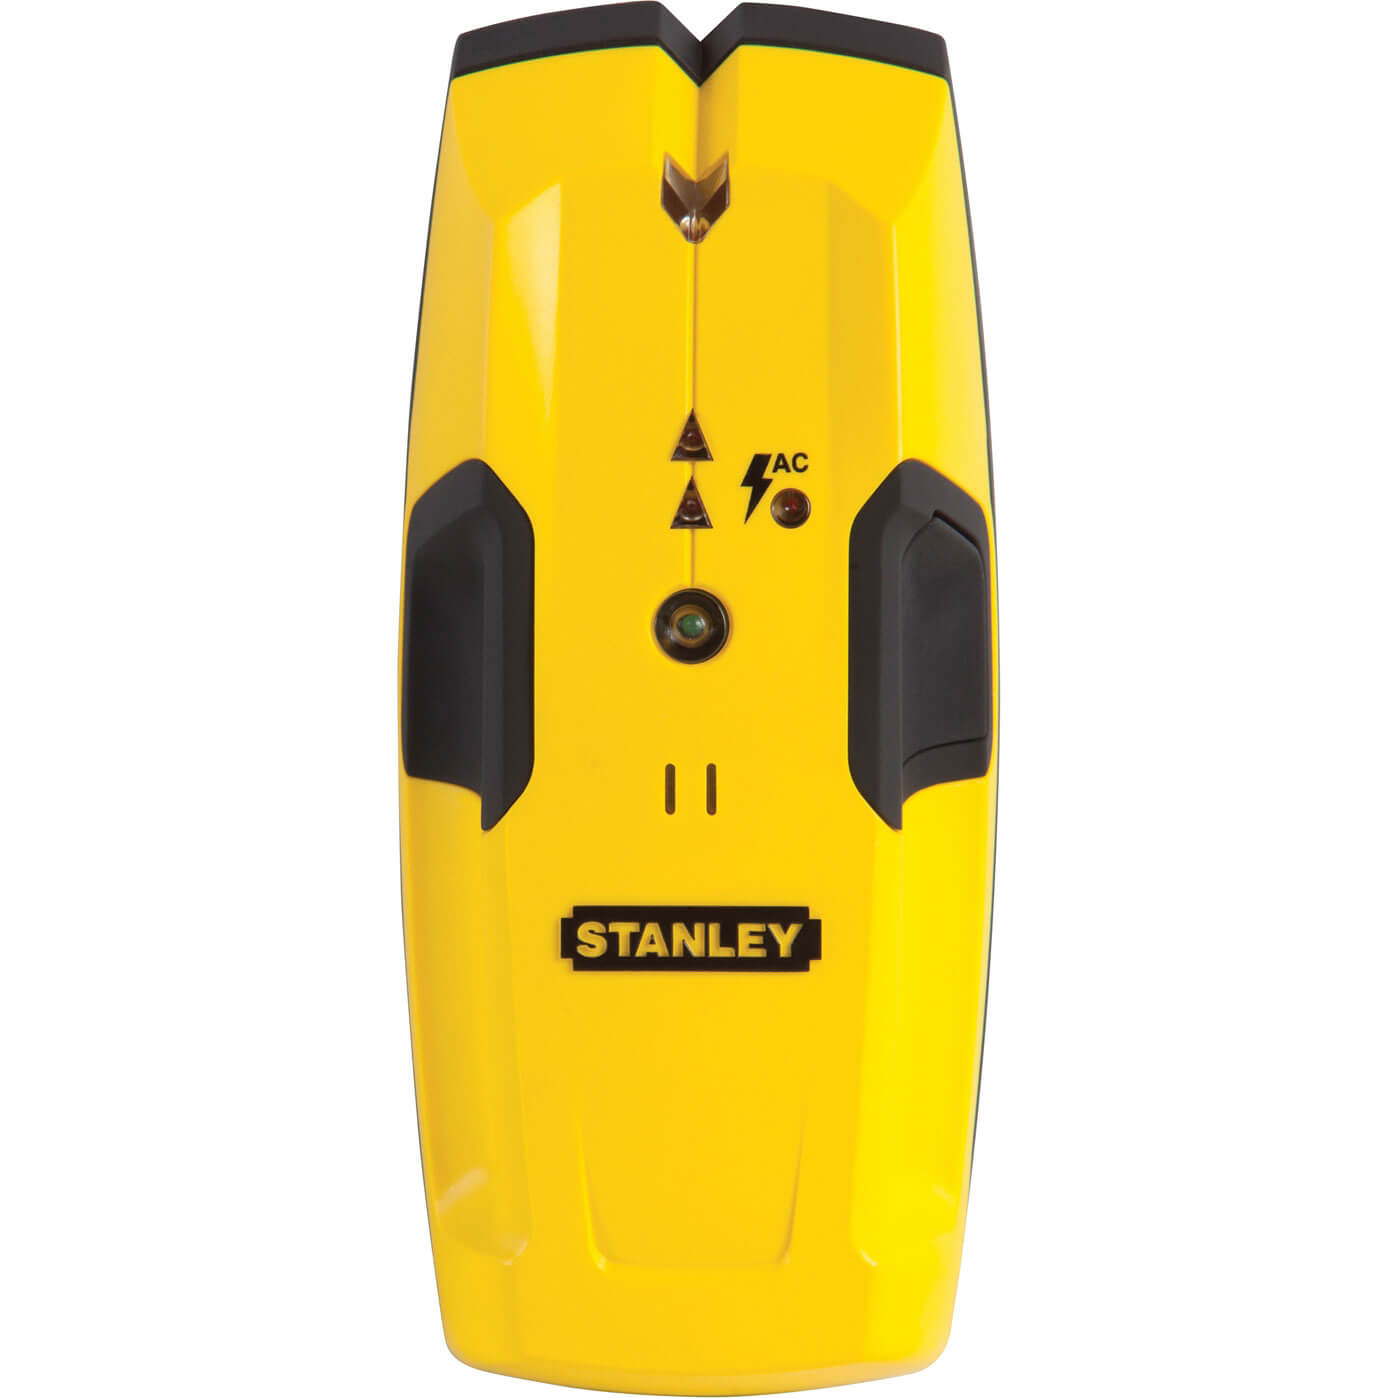 Stanley Stud Finder 100 Wall Scanner & Detector for Cables, Metal & Wood